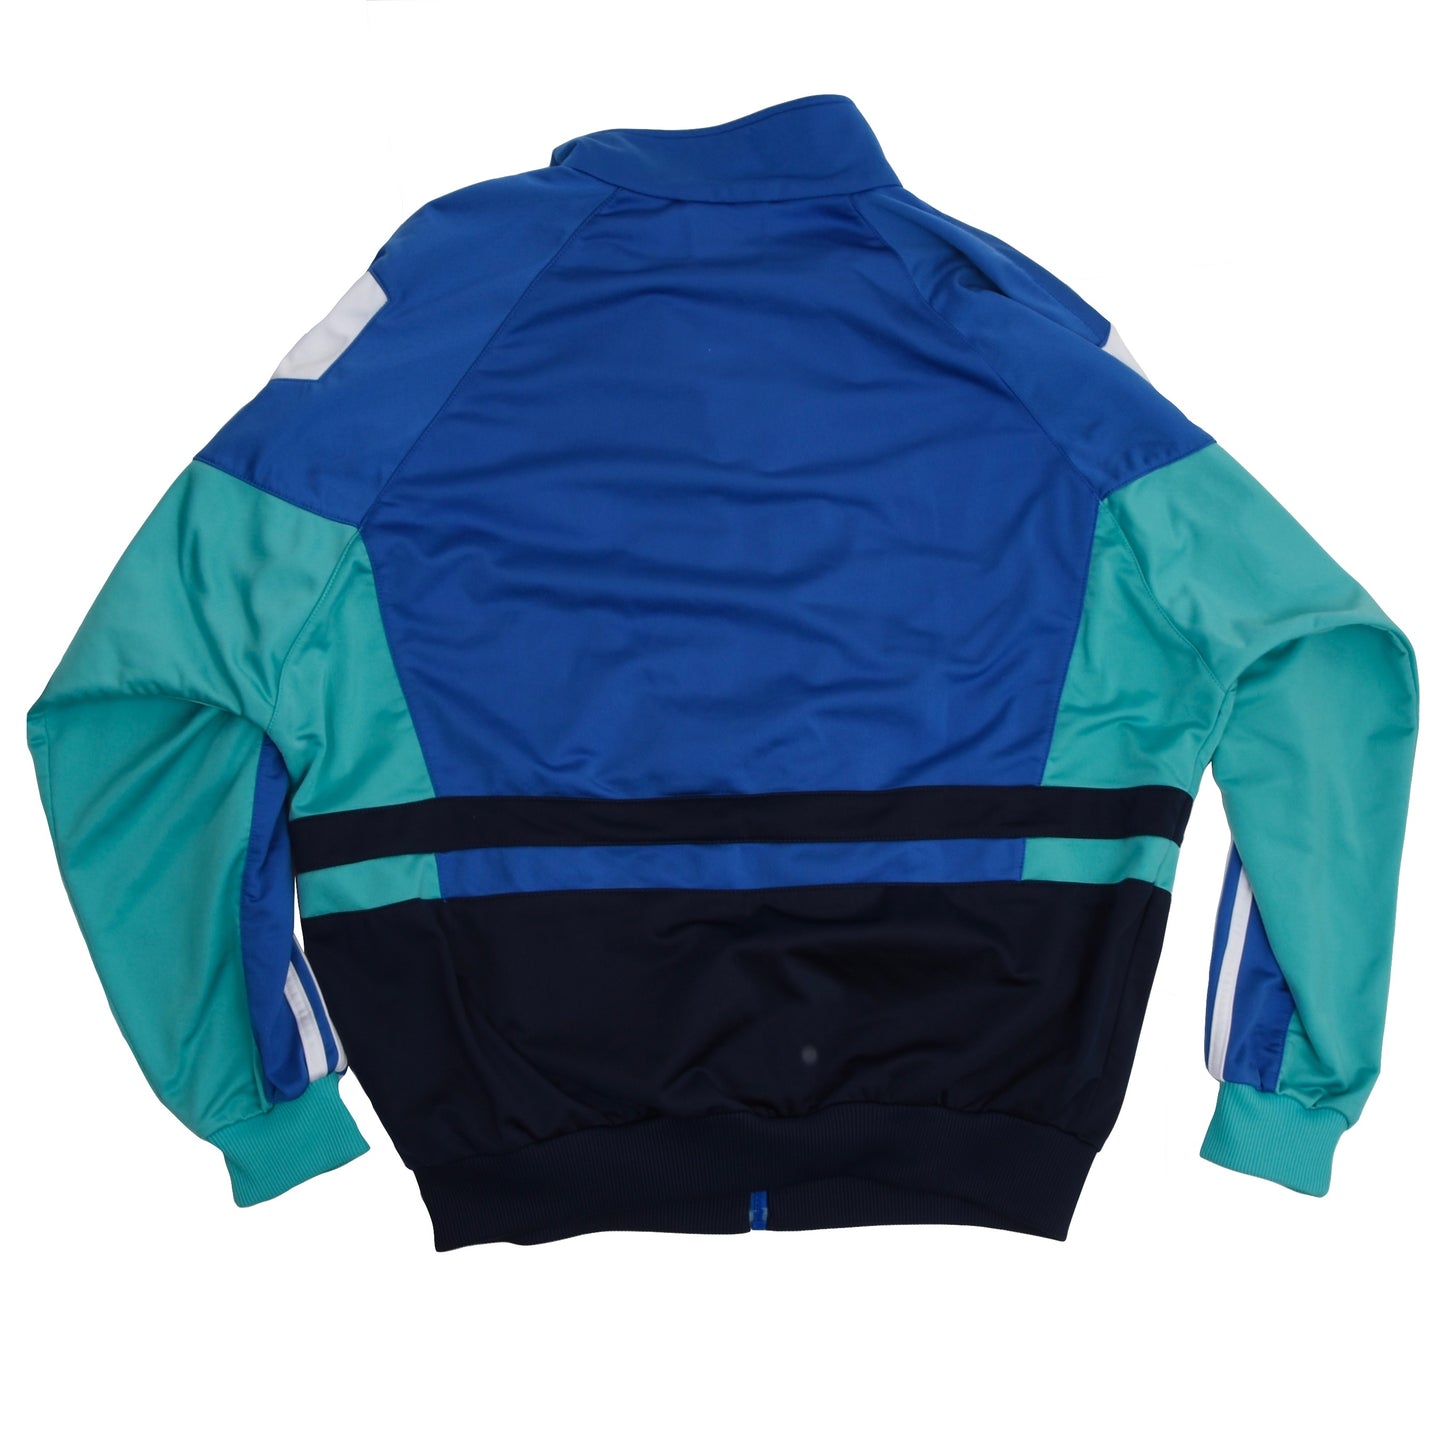 Vintage '90s Adidas Track Suit Size D7 - Blue, White, Teal